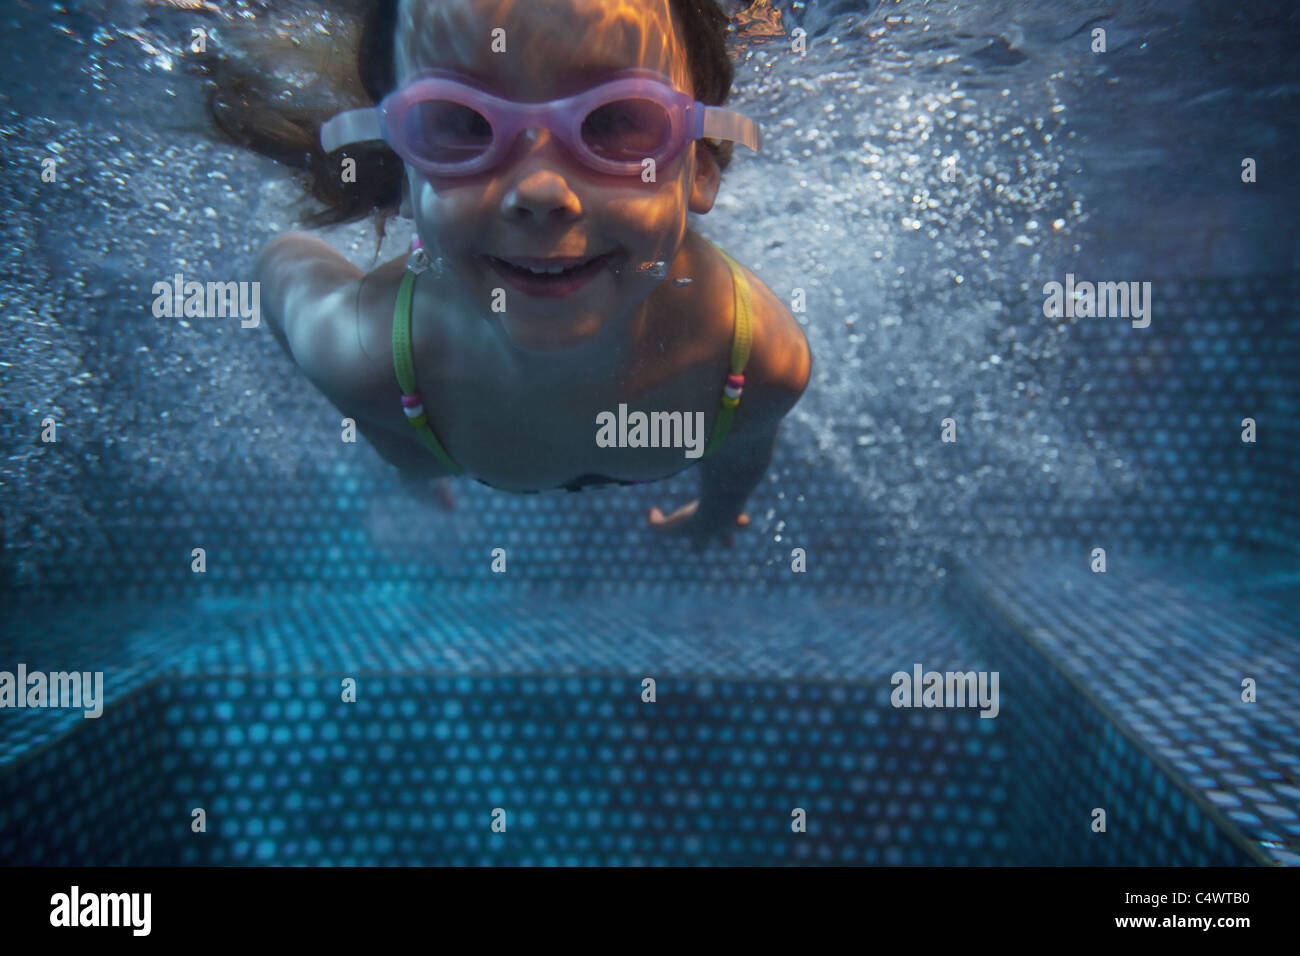 USA,Texas,Texarkana,Portrait of Girl (4-5) swimming underwater Banque D'Images